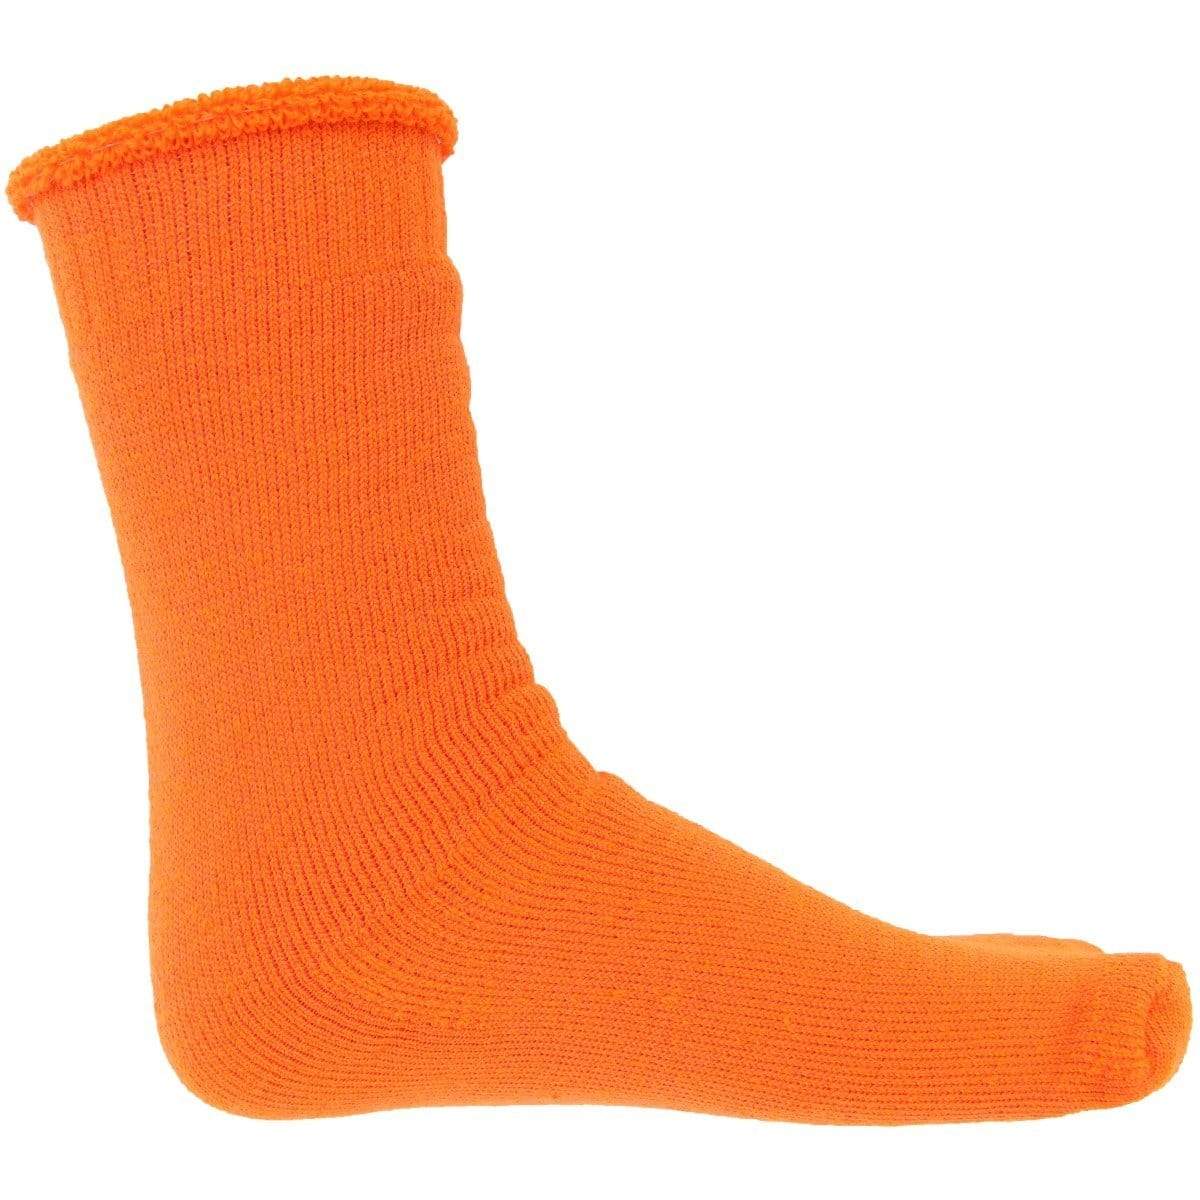 Dnc Workwear Hi-vis Woollen Socks - 3 Pair Pack - S103 Work Wear DNC Workwear Orange 12+ 